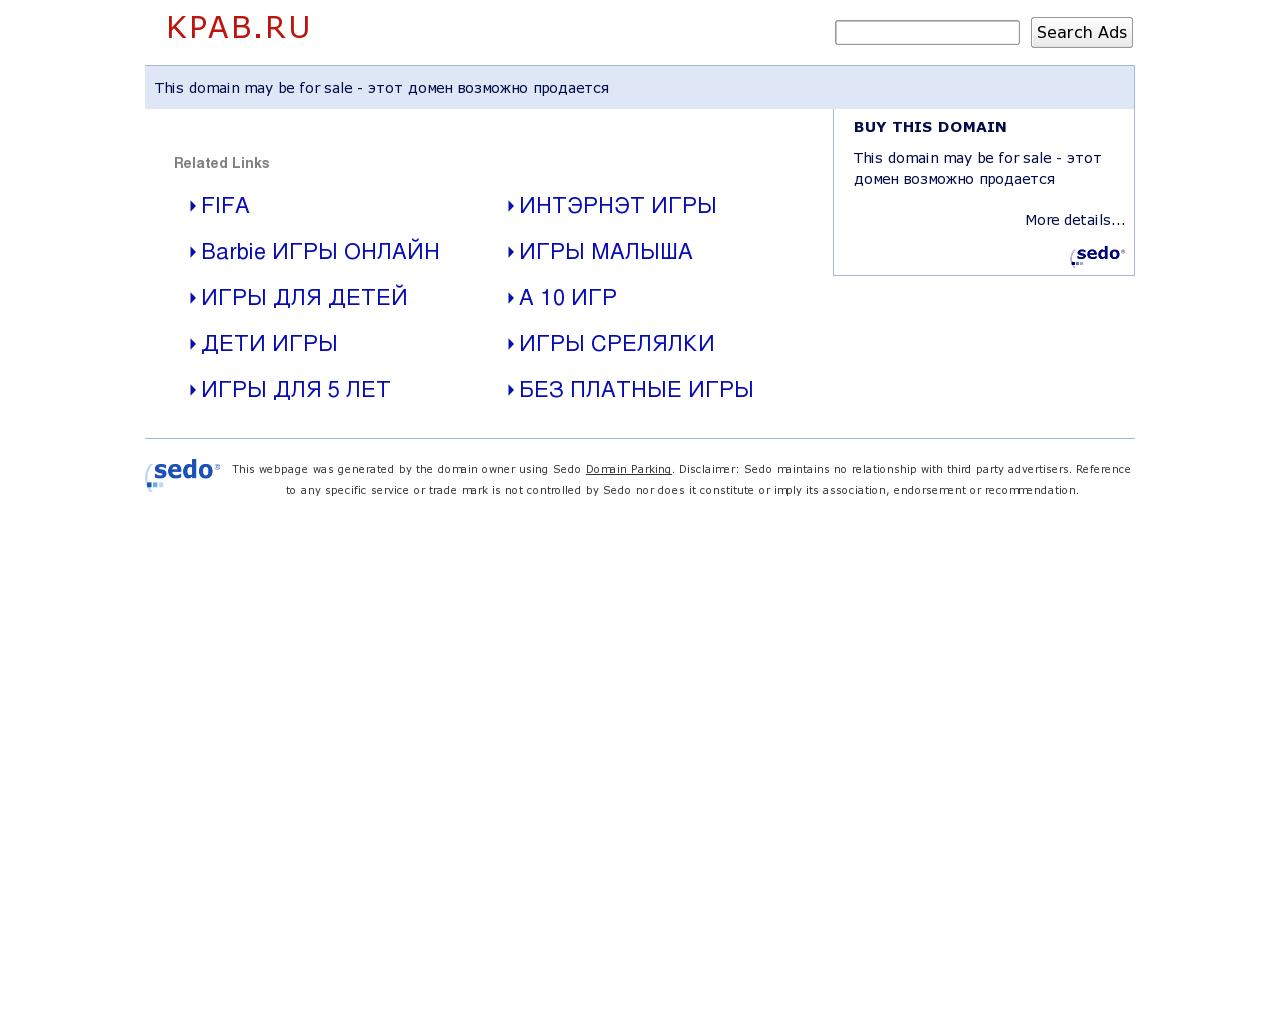 Изображение сайта kpab.ru в разрешении 1280x1024